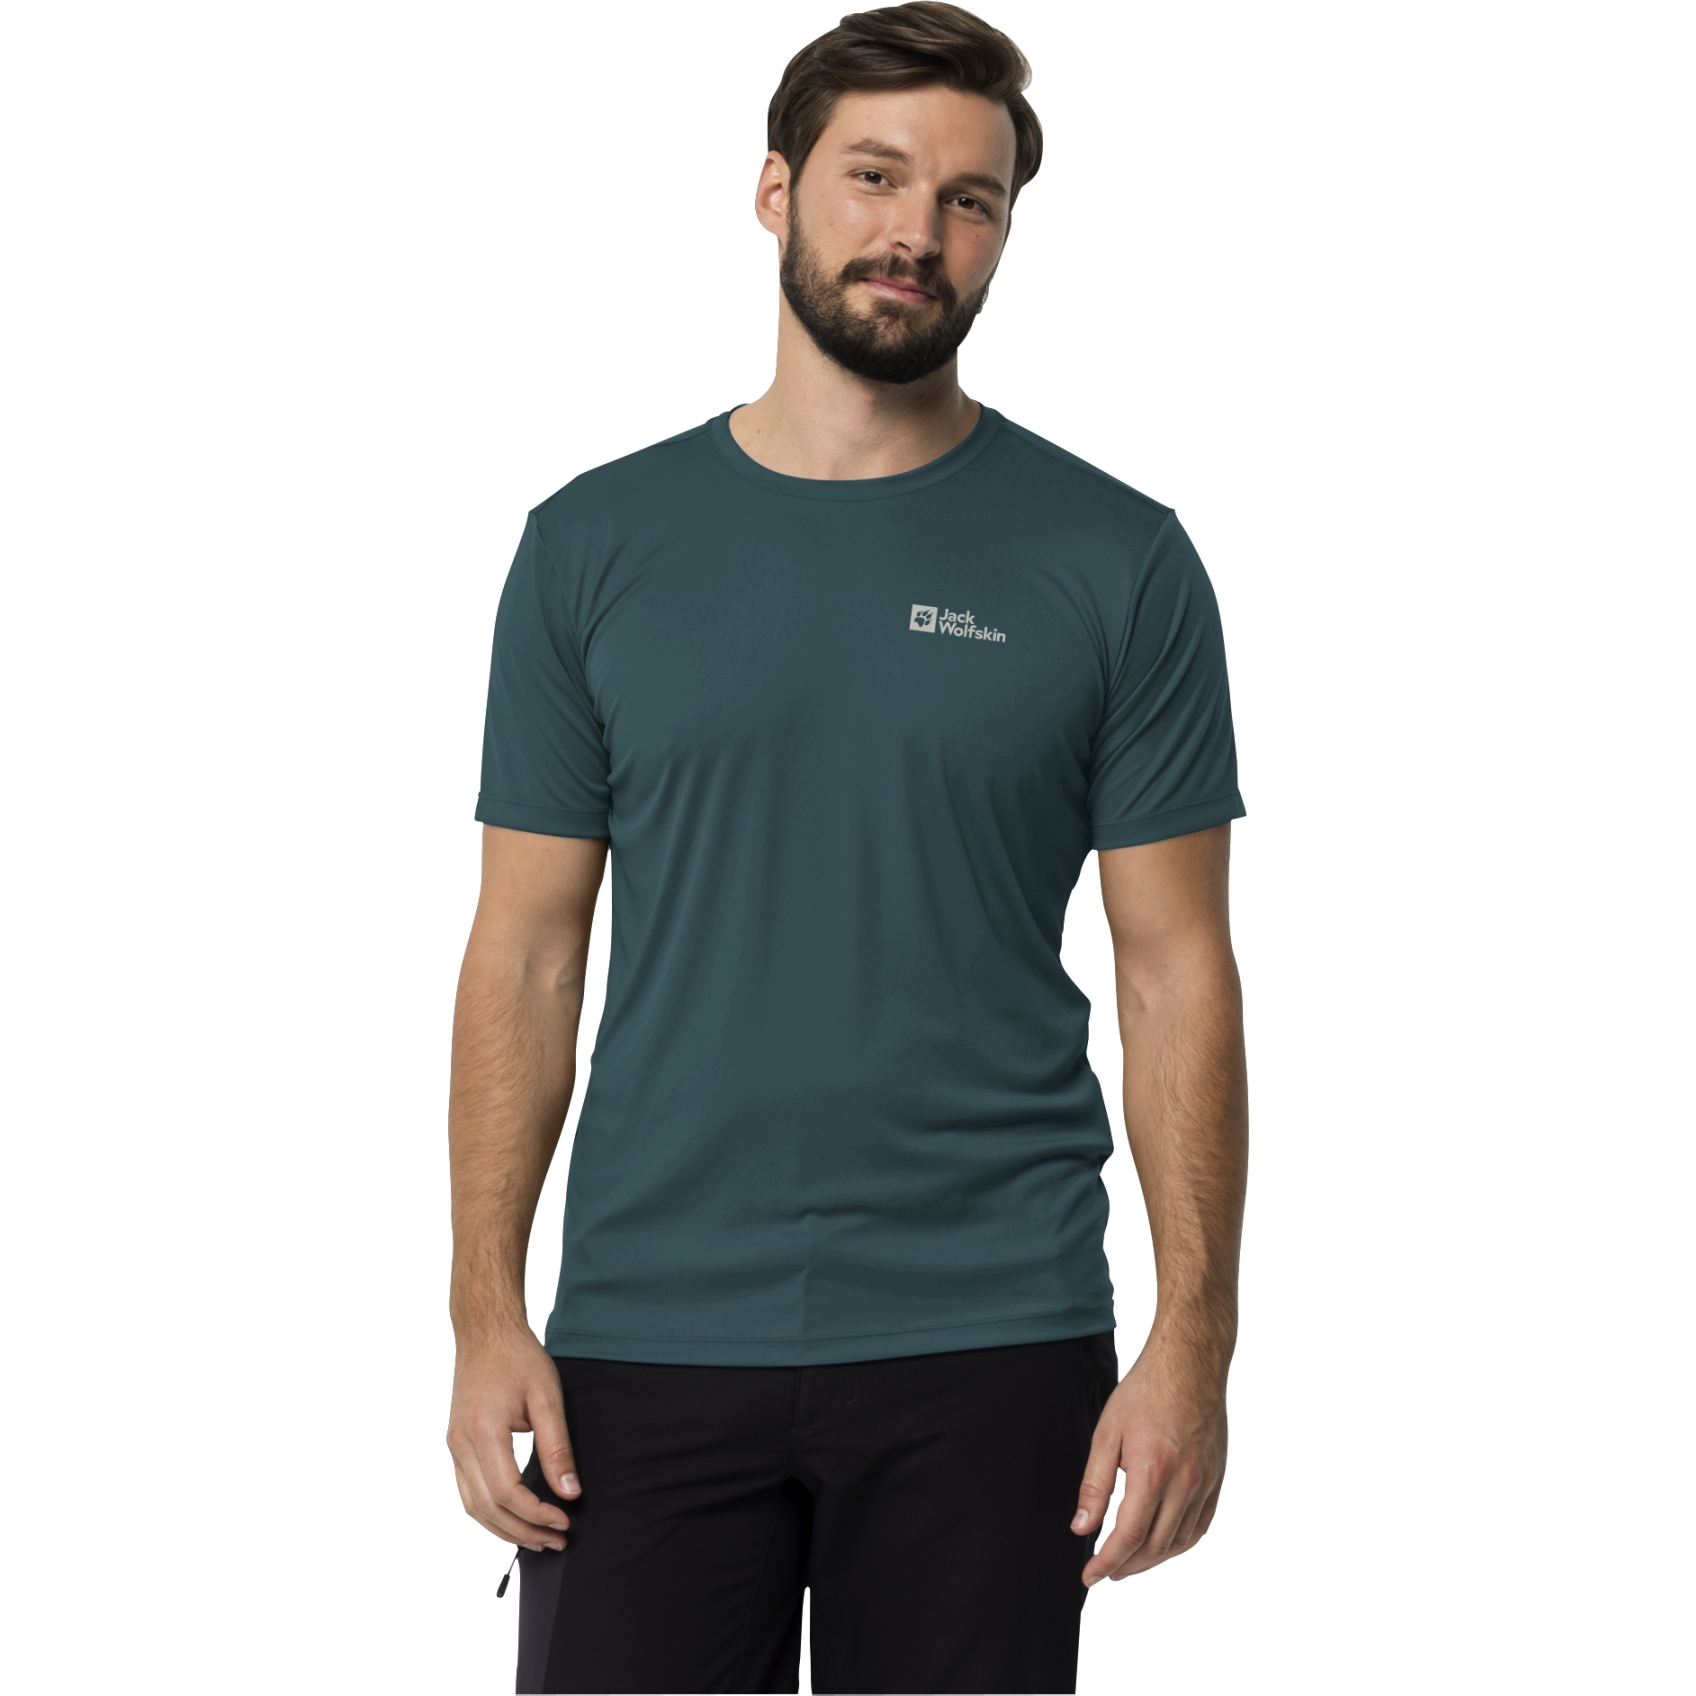 Productfoto van Jack Wolfskin Tech T-Shirt Heren - emerald